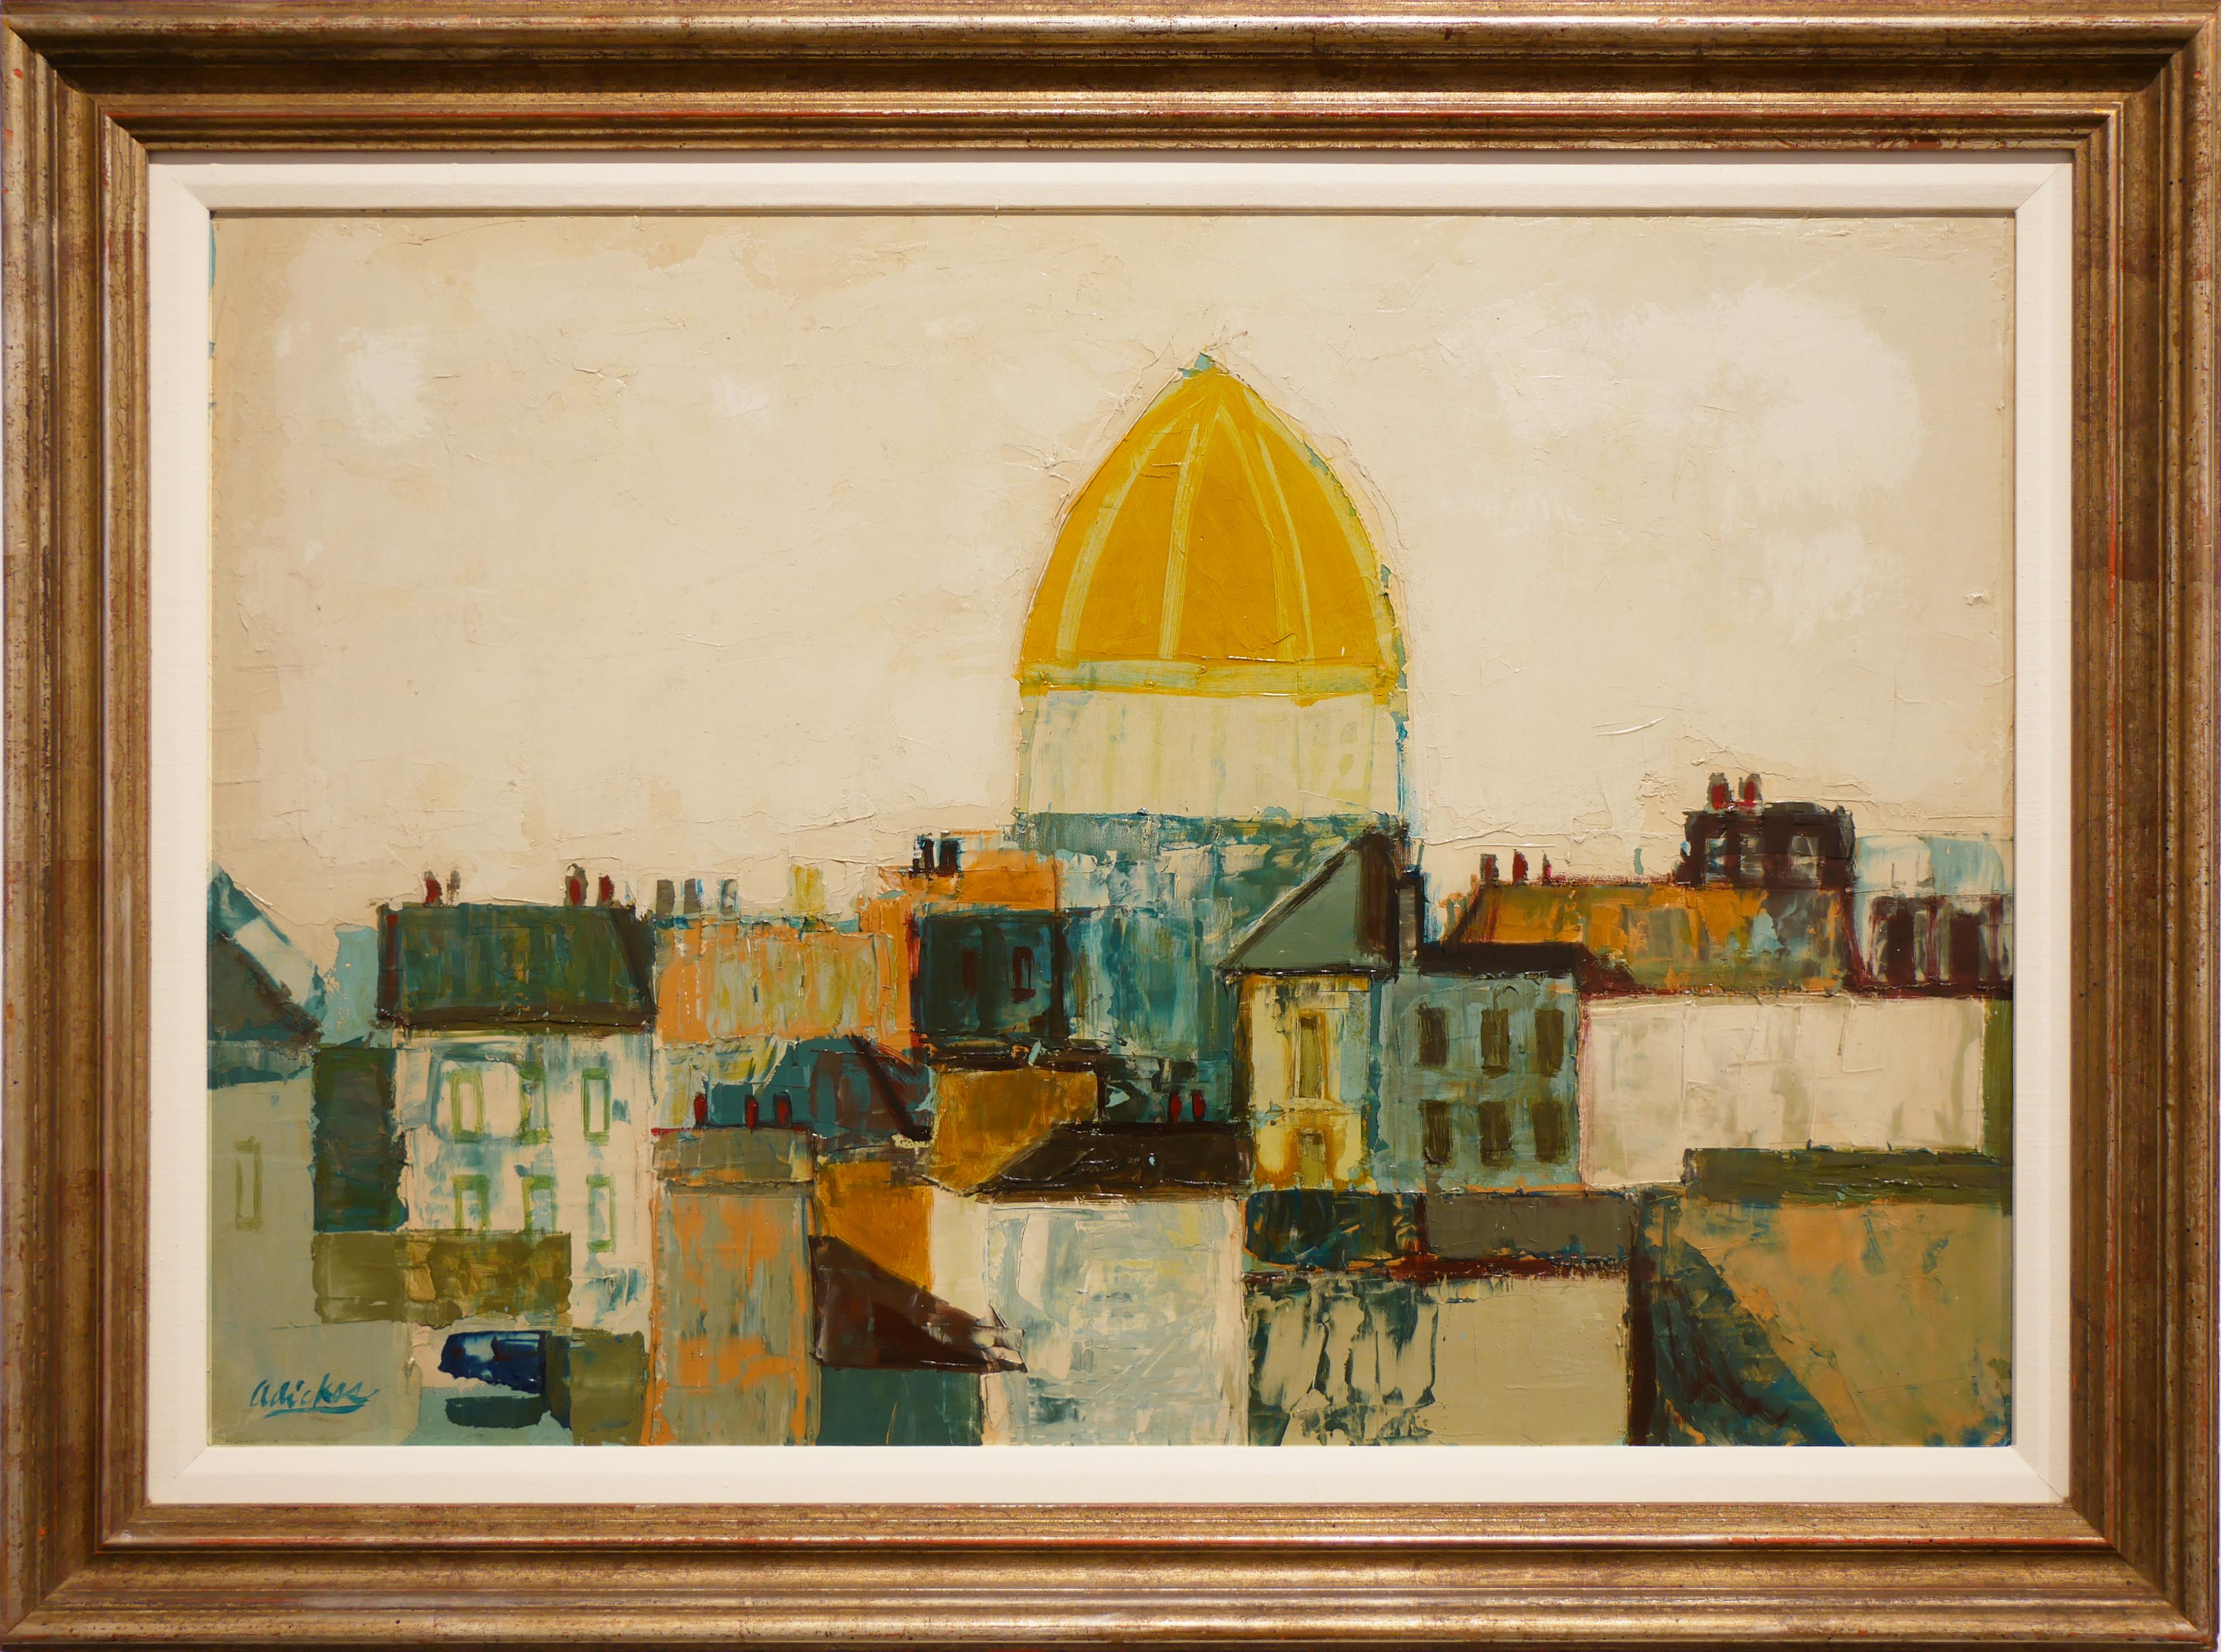 David Adickes Abstract Painting – Modernes abstraktes, gelb-braun getöntes italienisches Landschaftsgemälde „Die goldene Kuppel“ 